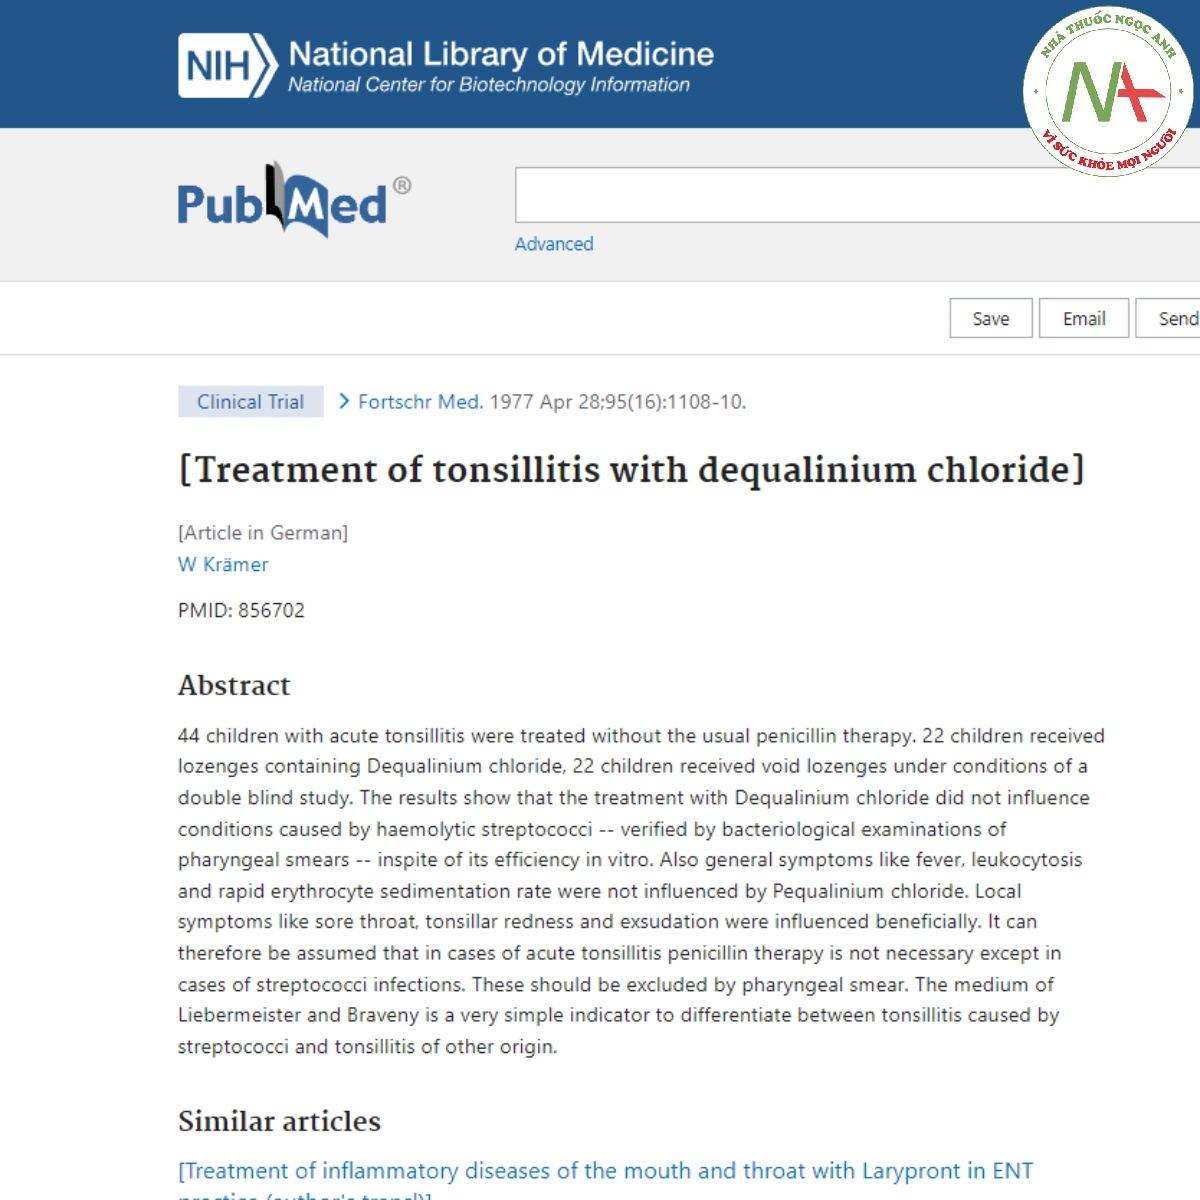 Treatment of tonsillitis with dequalinium chloride